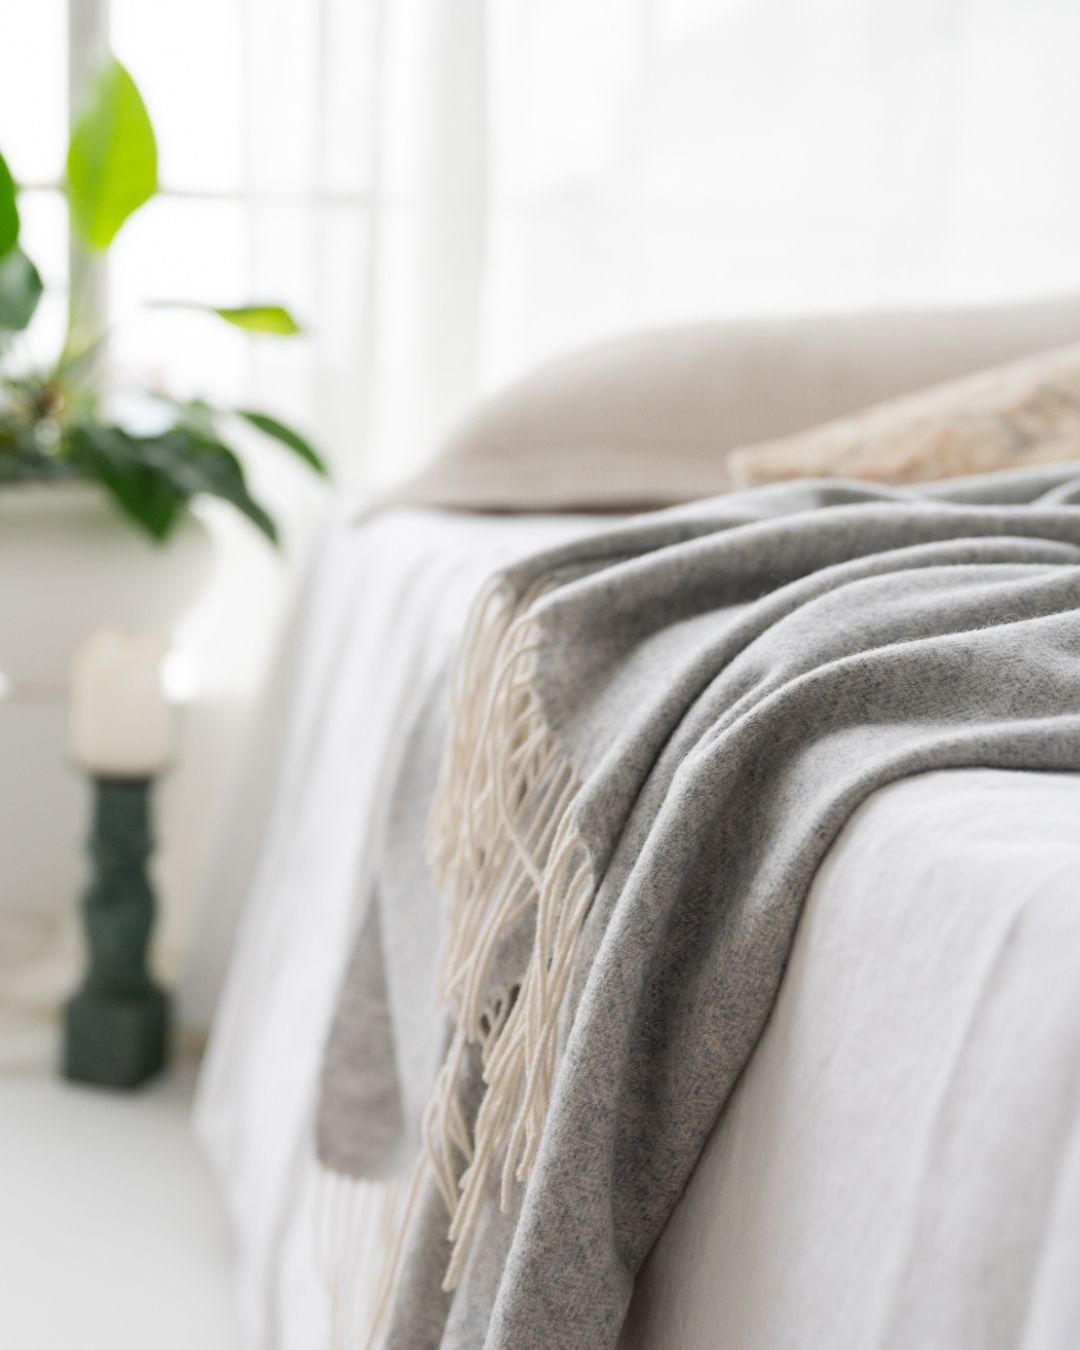 Cashmere blanket on white linen in a light filled bedroom